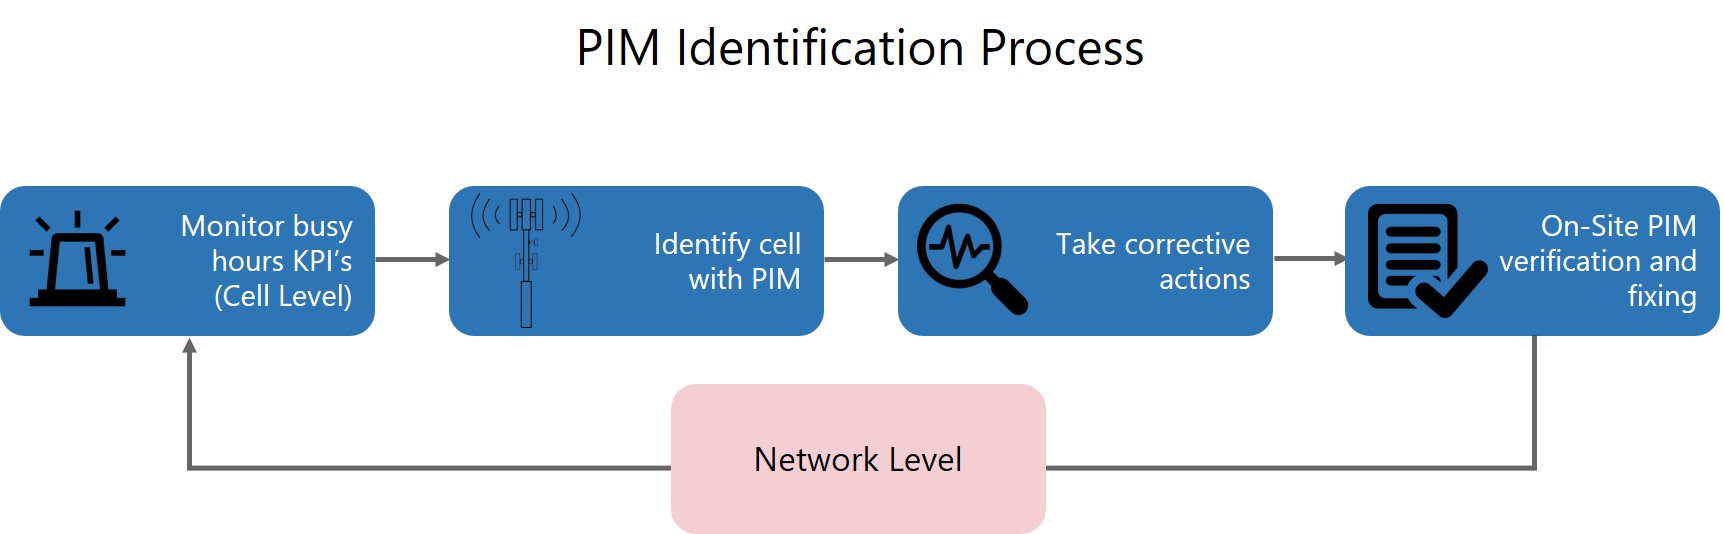 PIM-identification-process